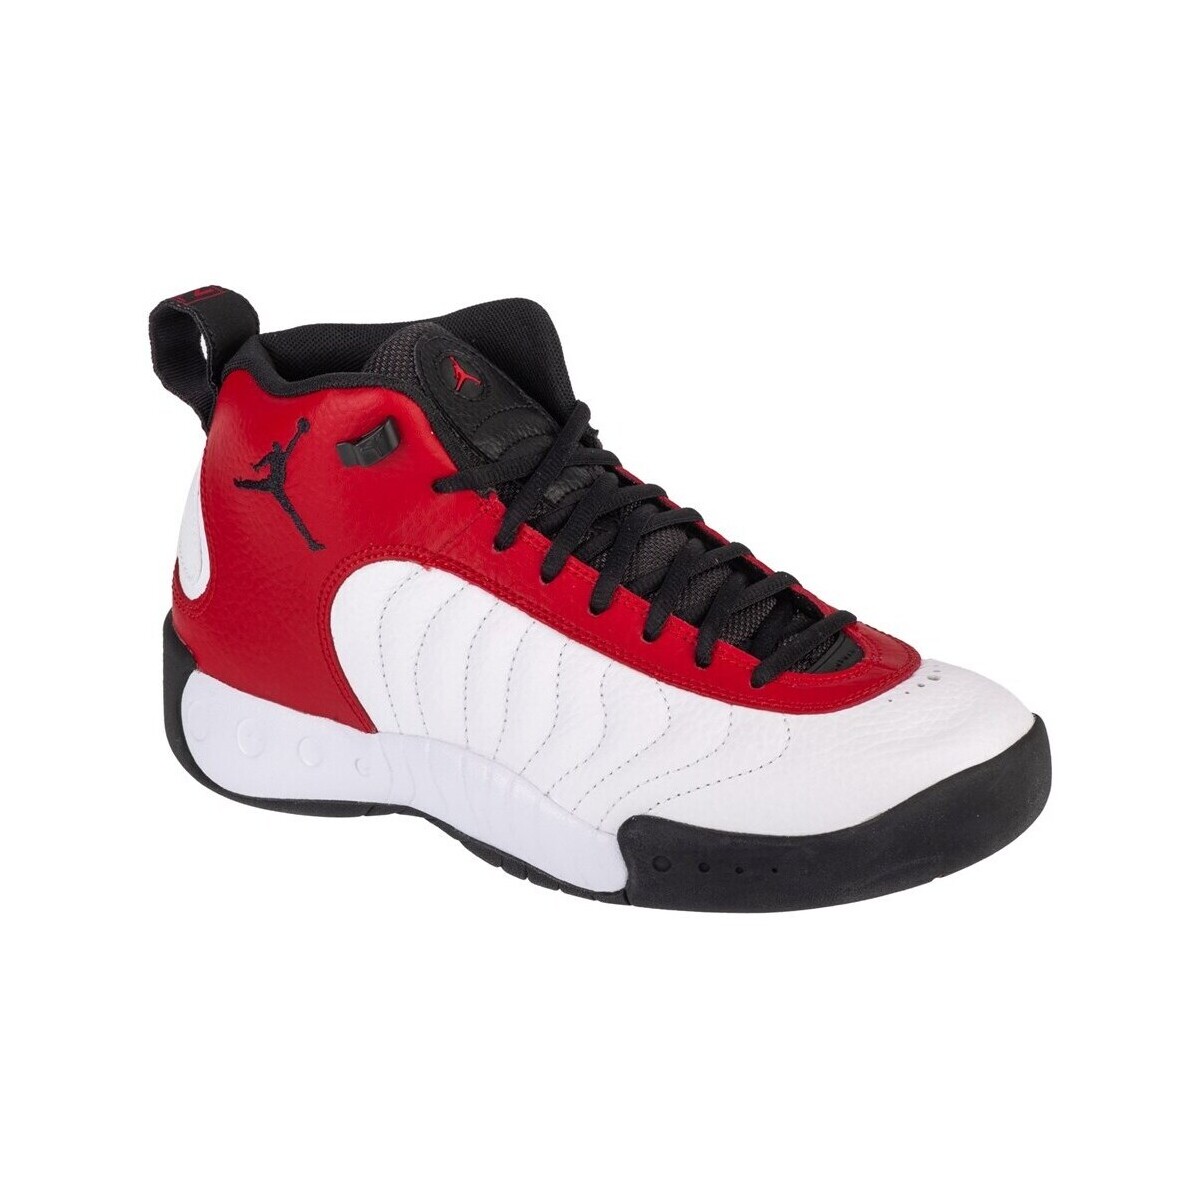 Nike Air Jordan Jumpman Pro Chicago multicolour